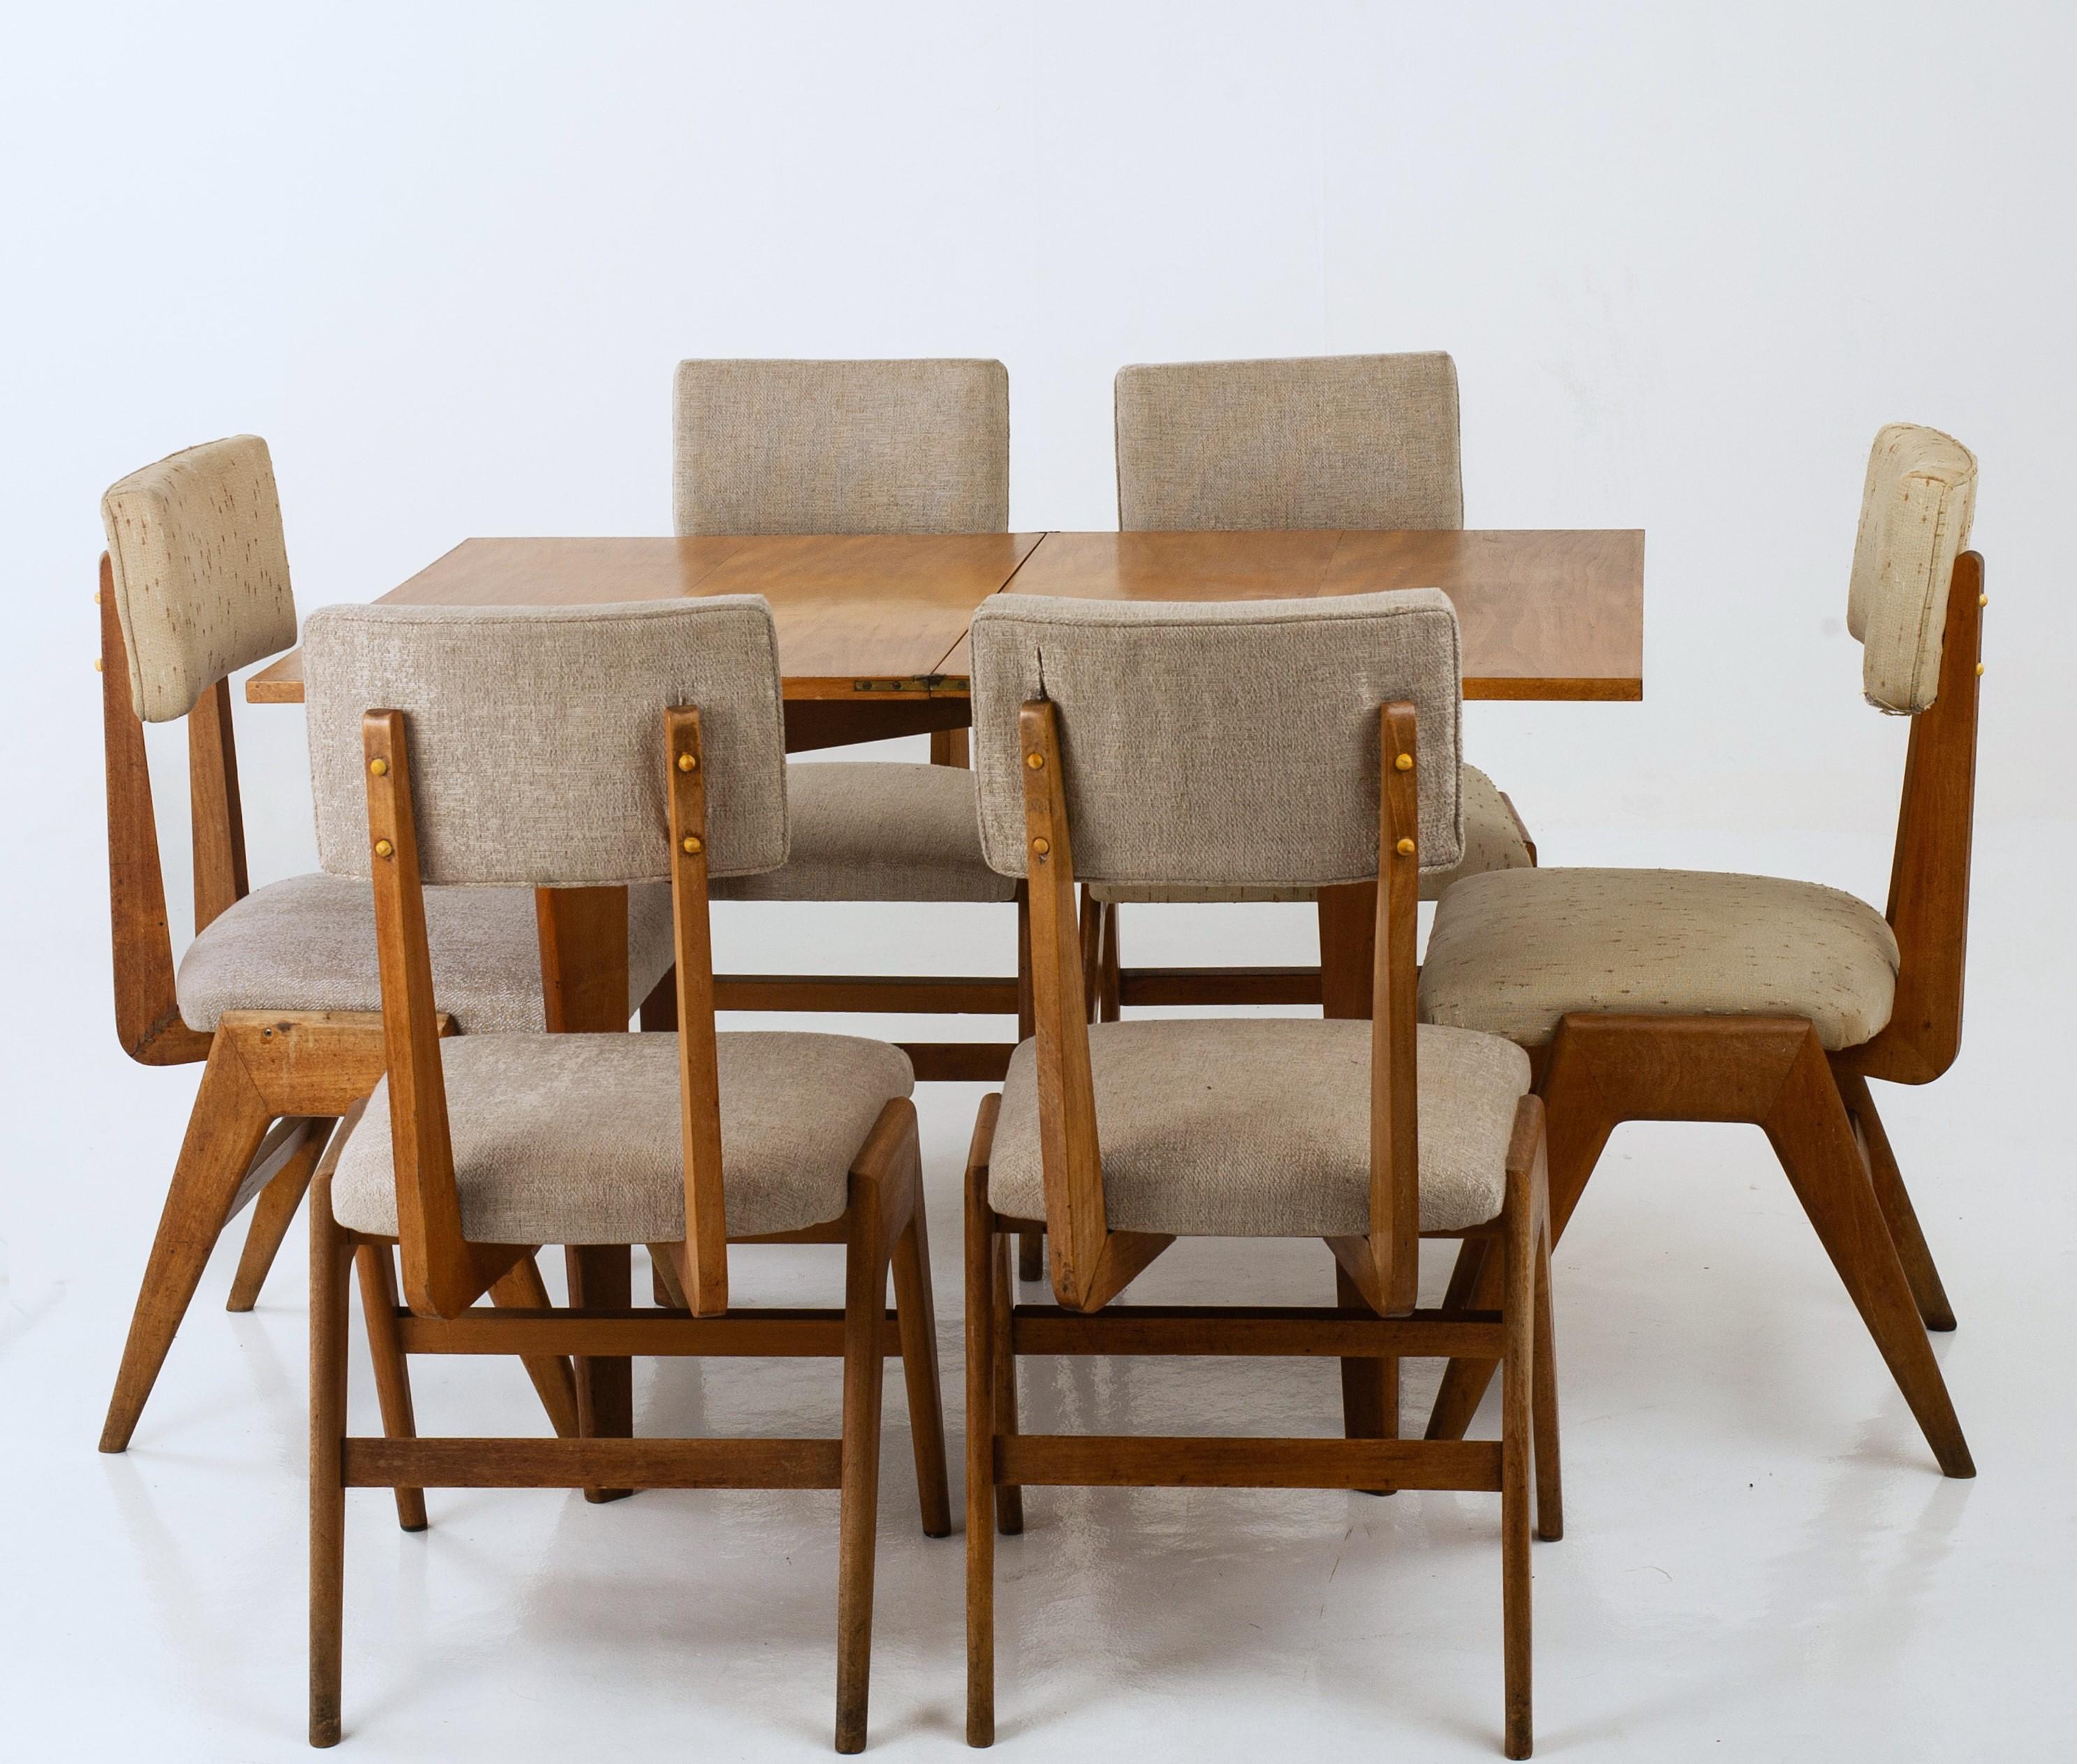 Wood Chairs C10 by Lina Bo Bardi